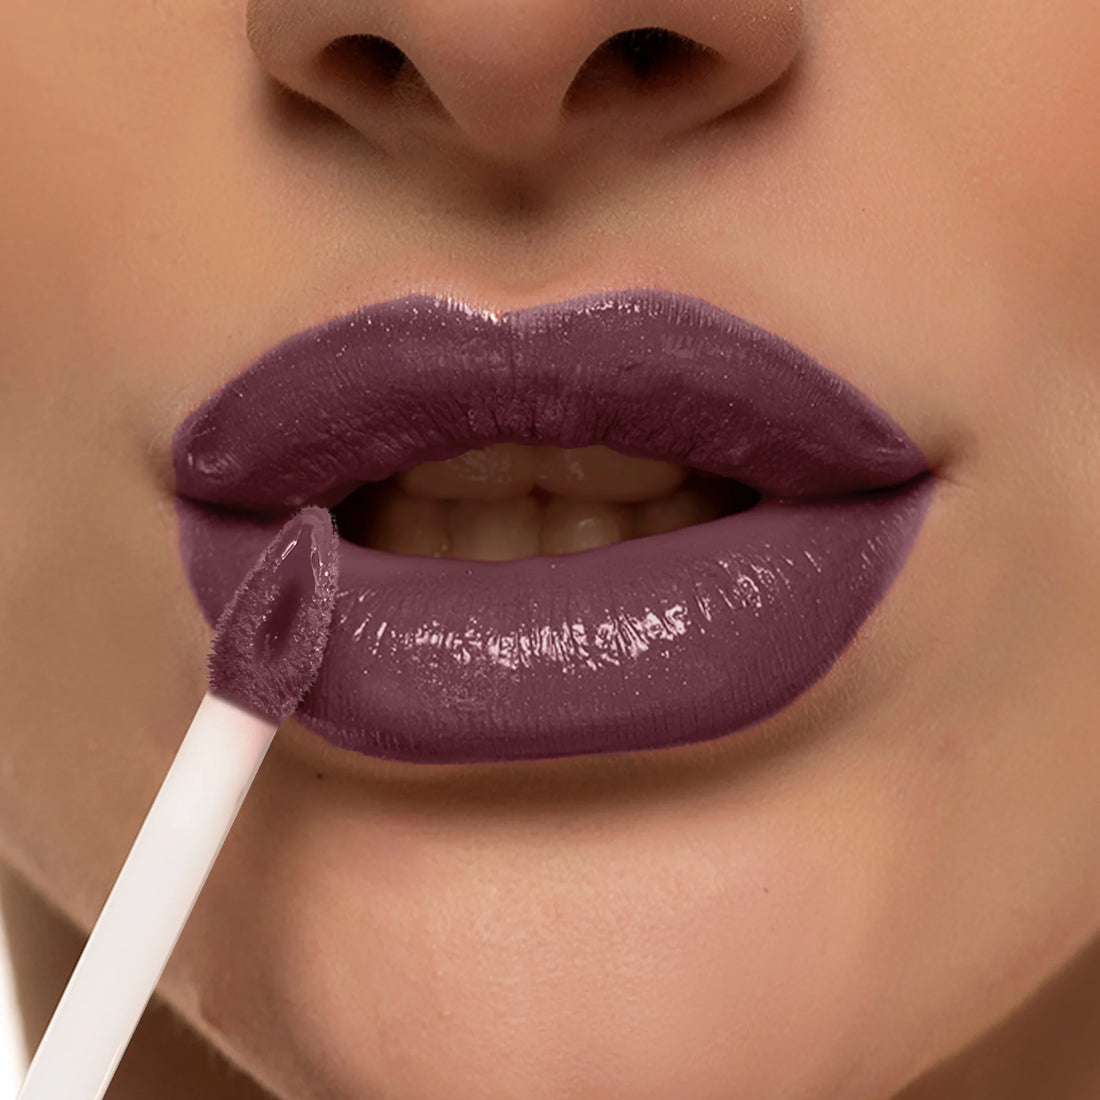 RENEE Gloss Stay - Transfer Proof Glossy Liquid Lip Color Hannah